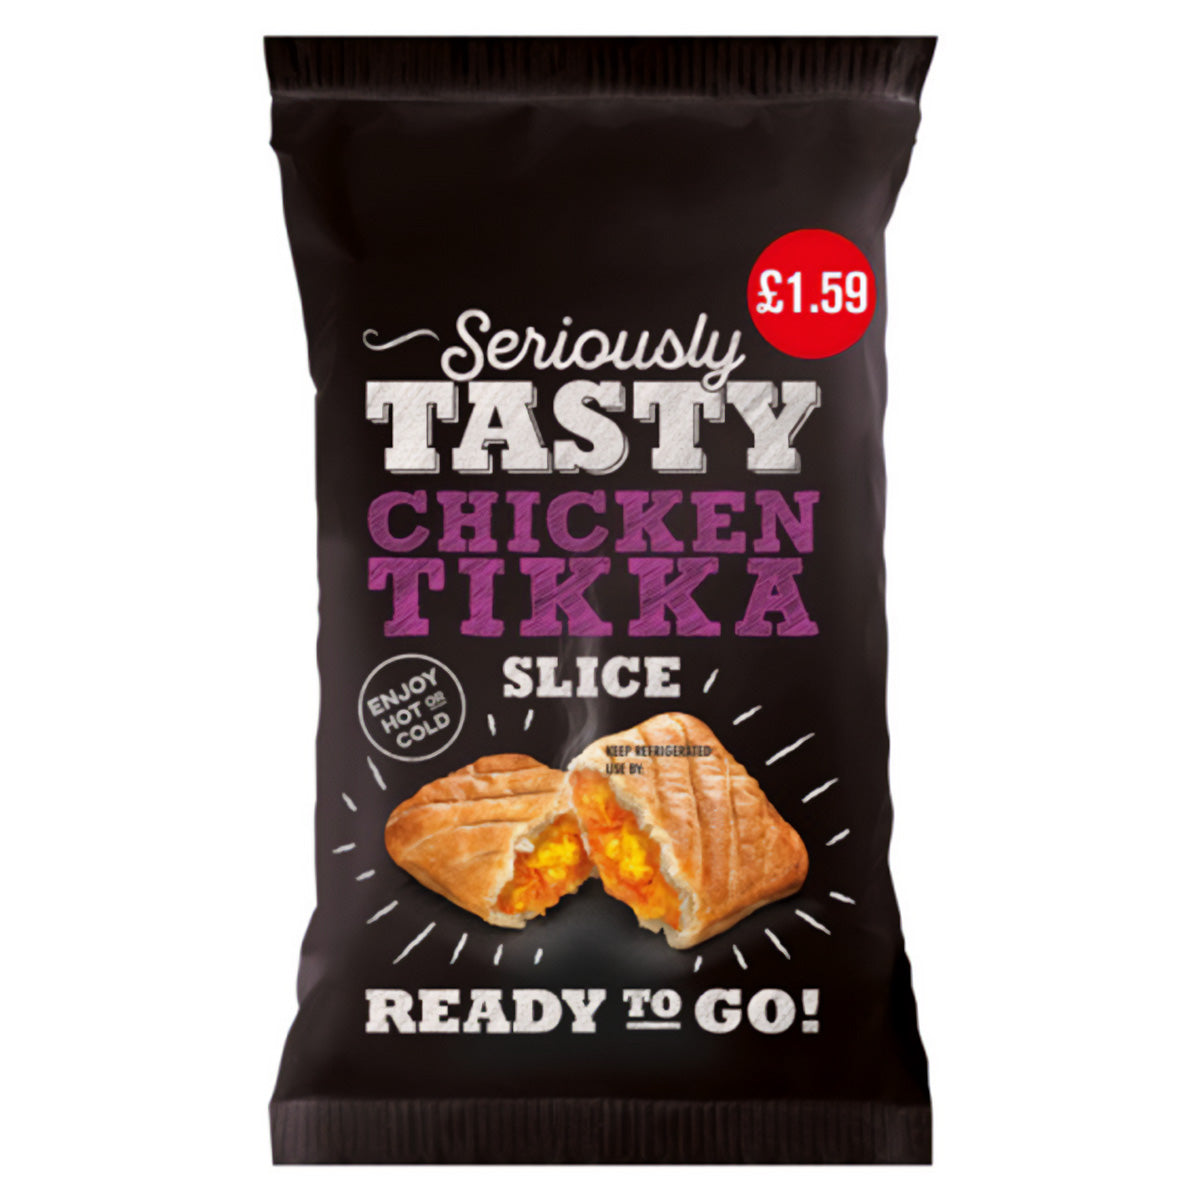 A bag of Seriously Tasty - Chicken Tikka Slice - 150g ready to go.